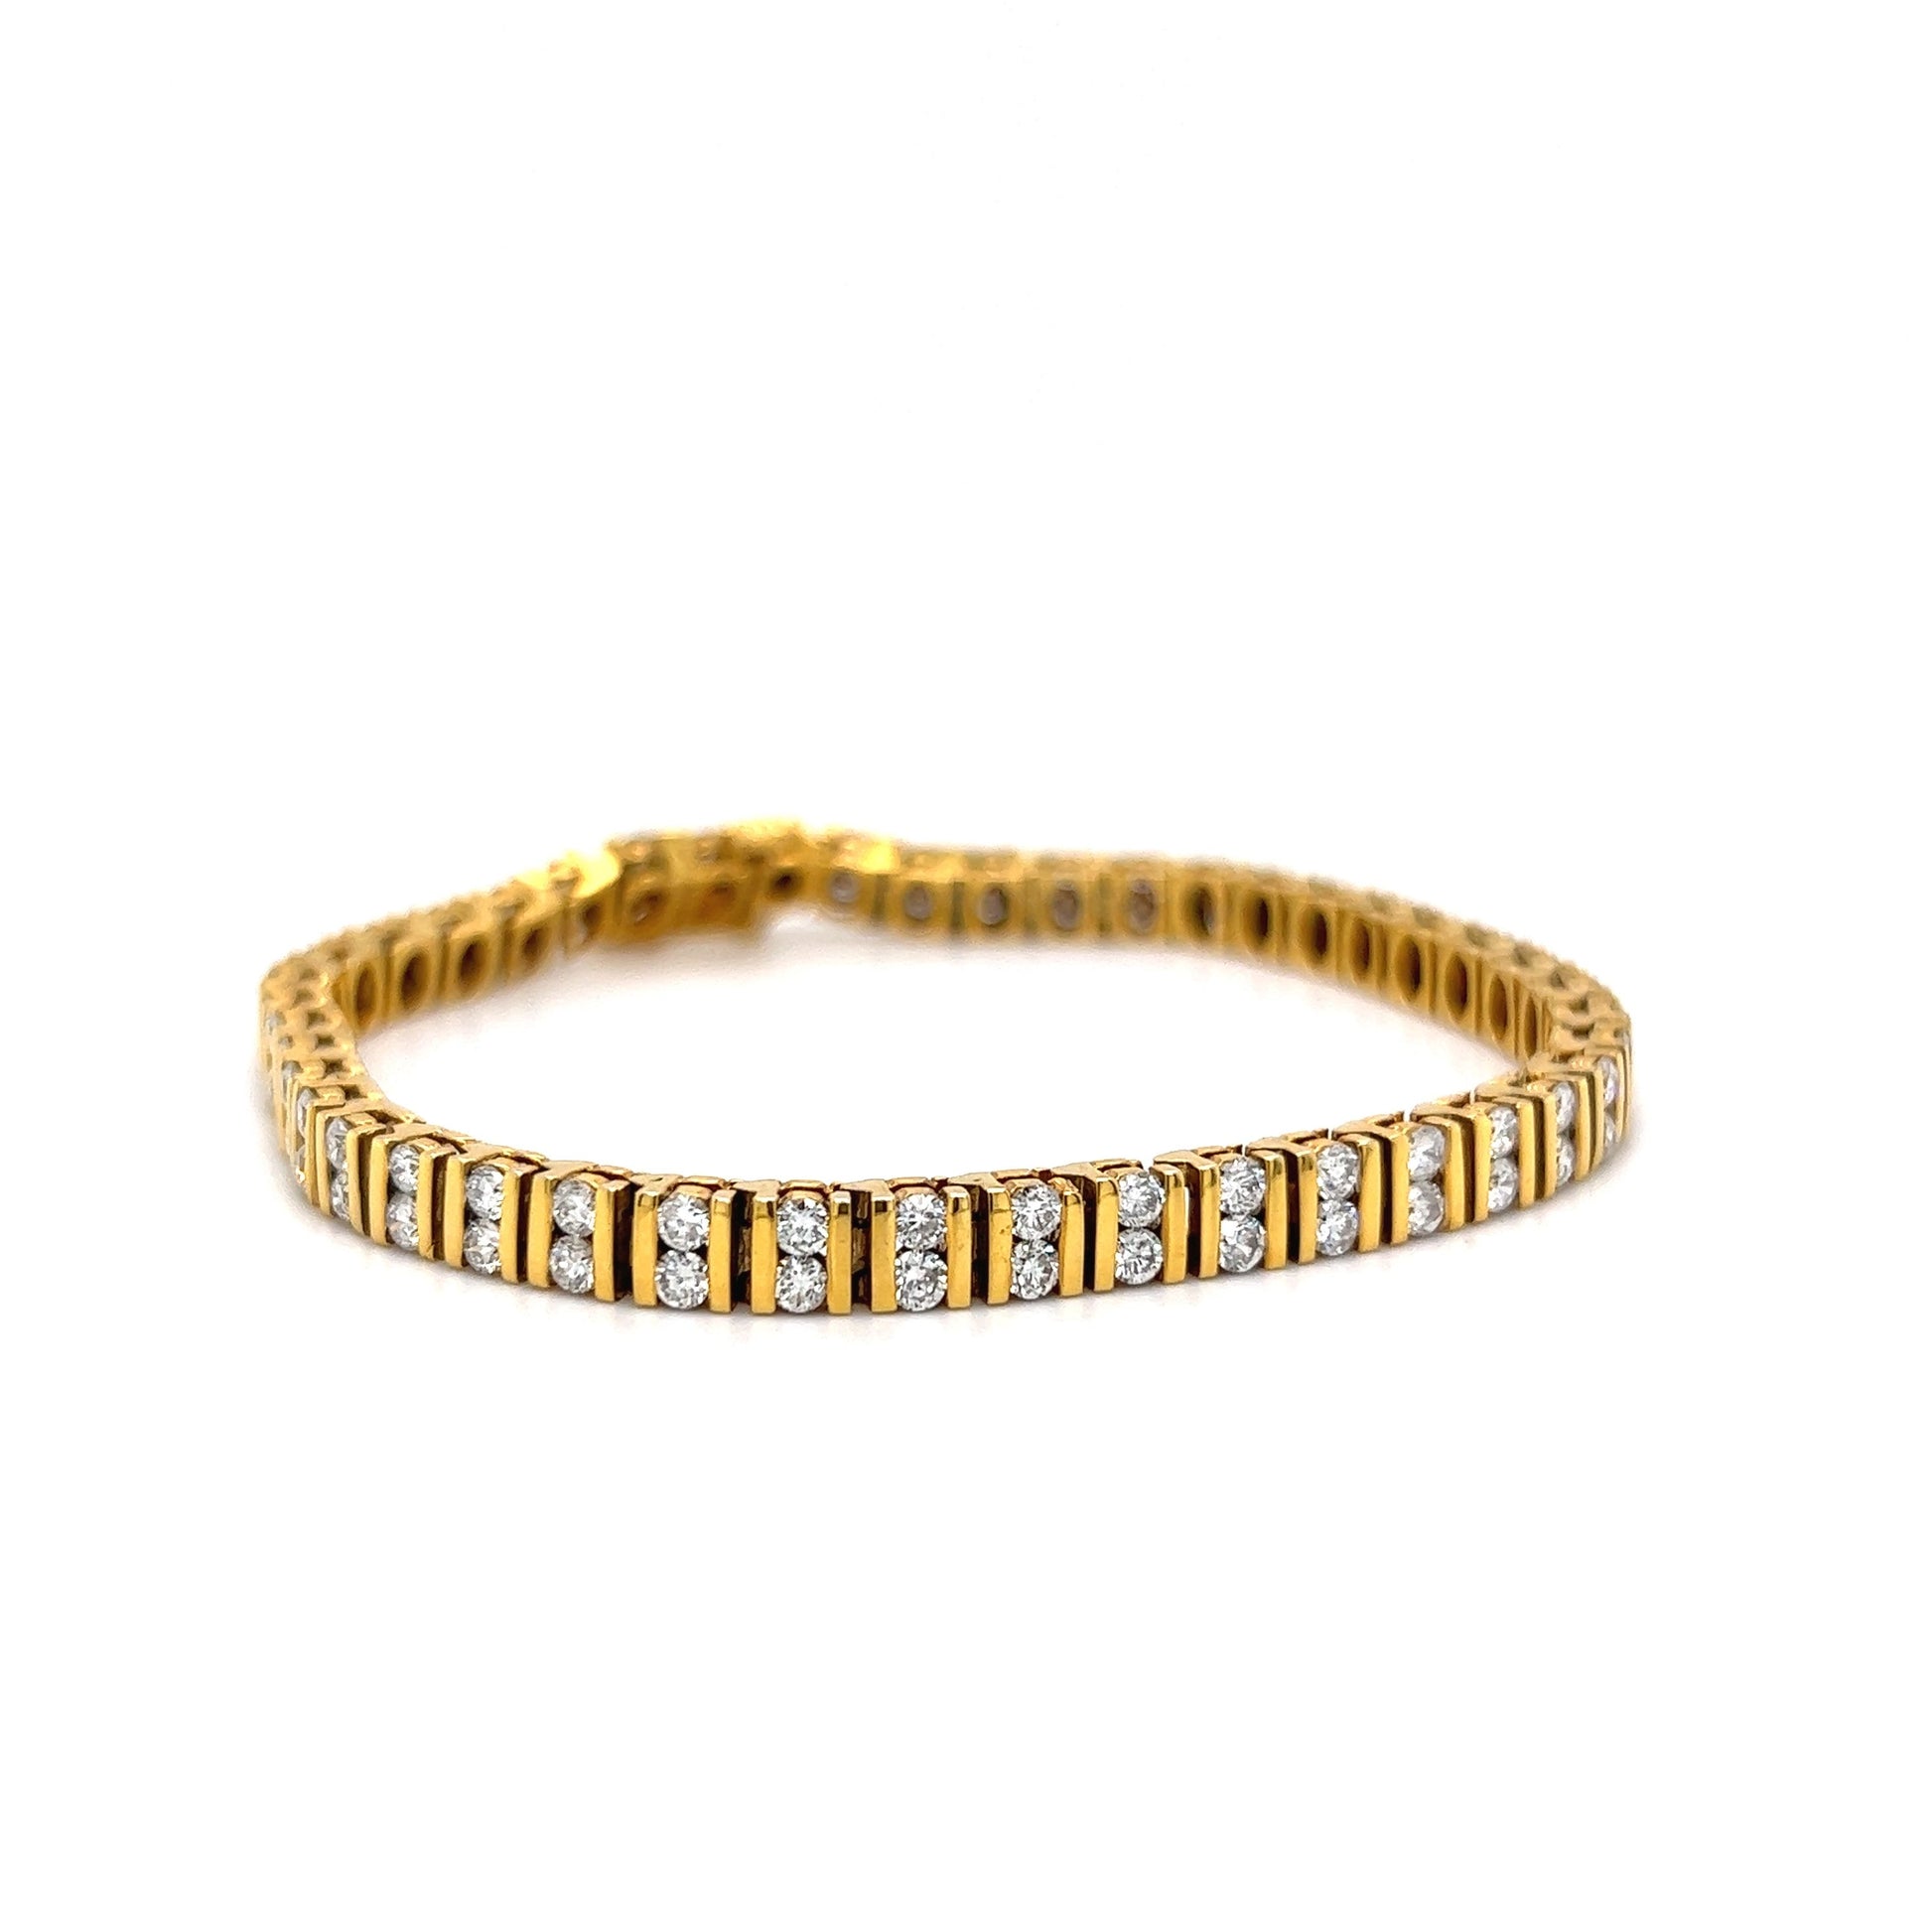 5 Carat Bar Set Diamond Tennis Bracelet in 14k Yellow Gold